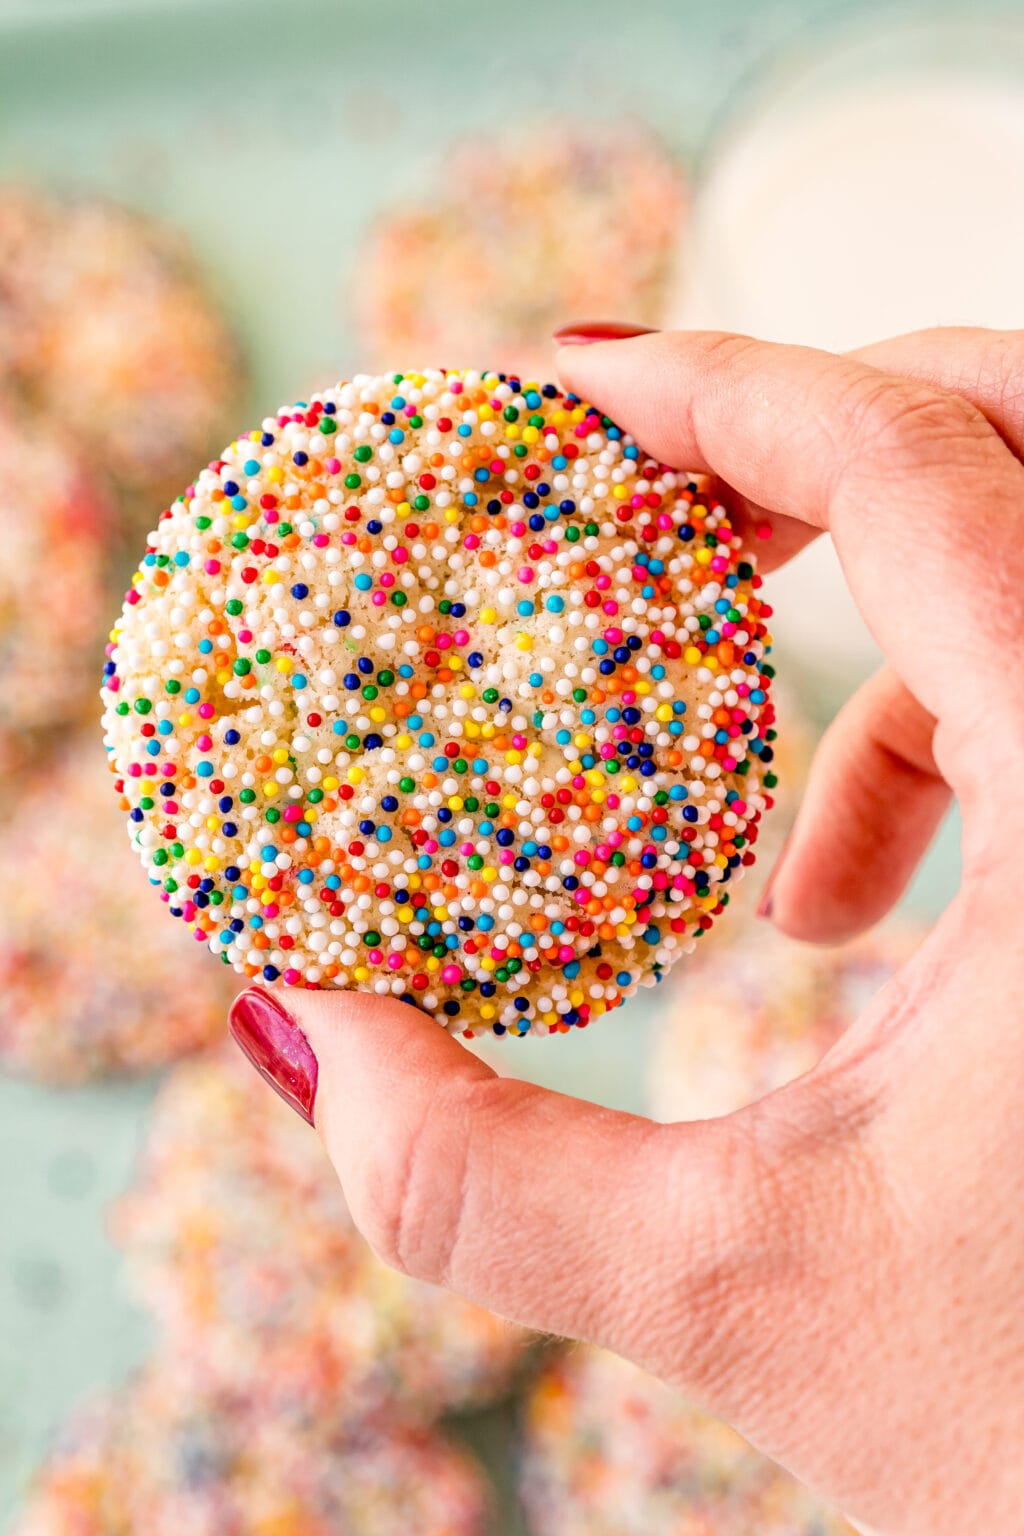 woman's hand holding funfetti cake mix cookies